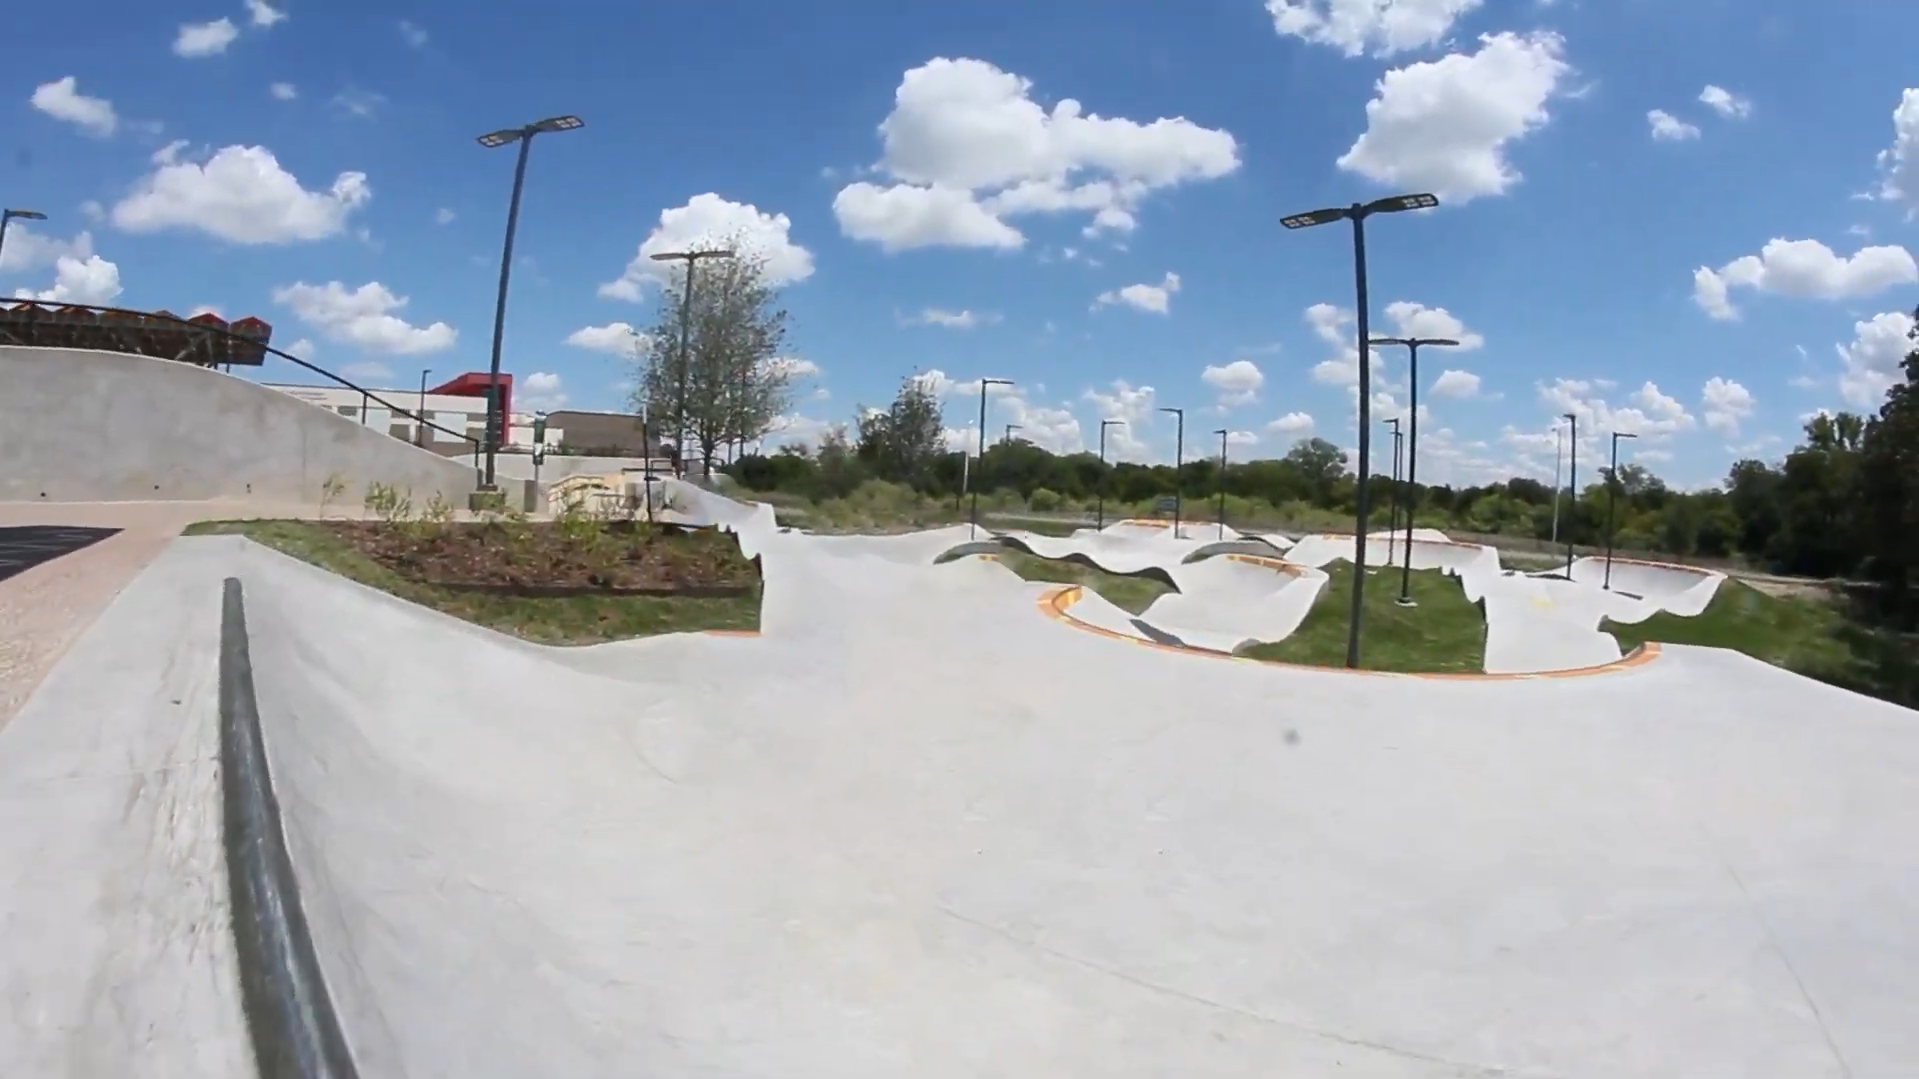 The Best Skate Parks In Austin, Texas